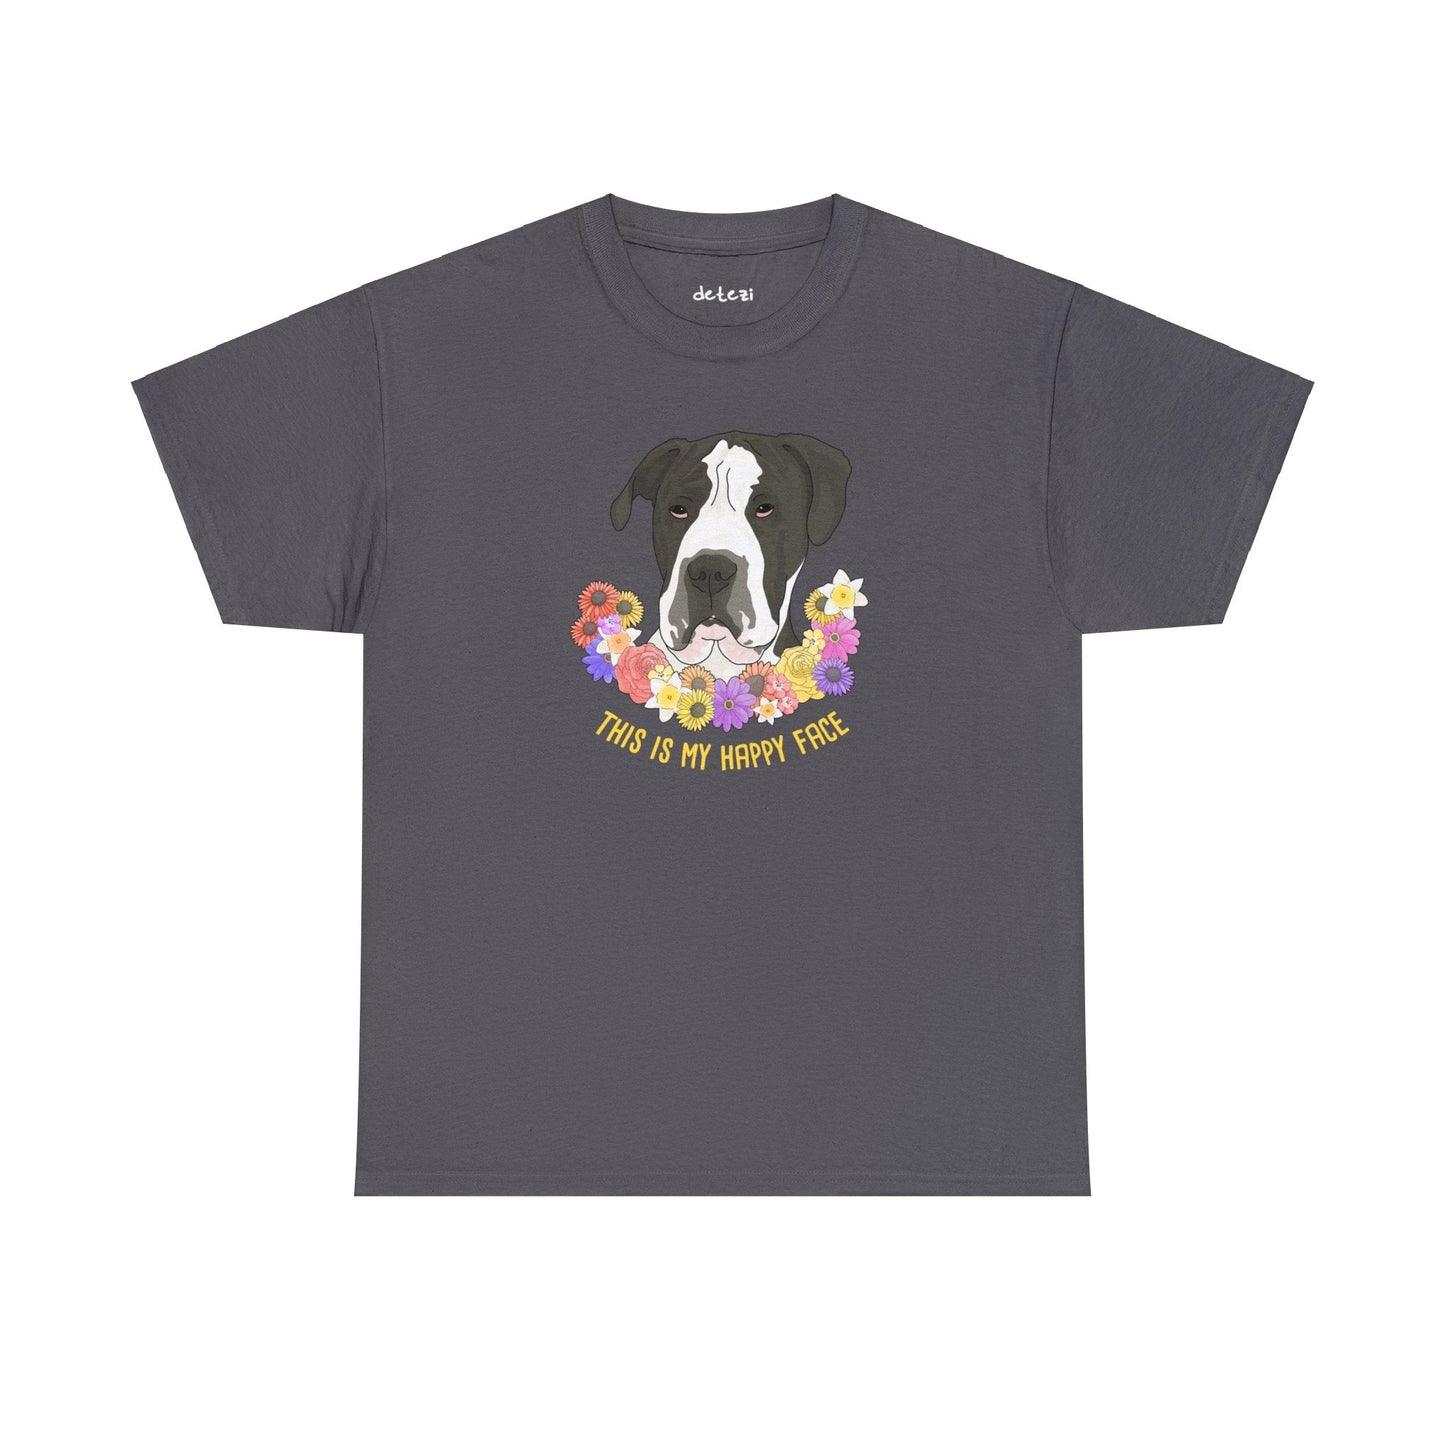 Nico | FUNDRAISER for Philly Bully Team | T-shirt - Detezi Designs-28947347979092555755